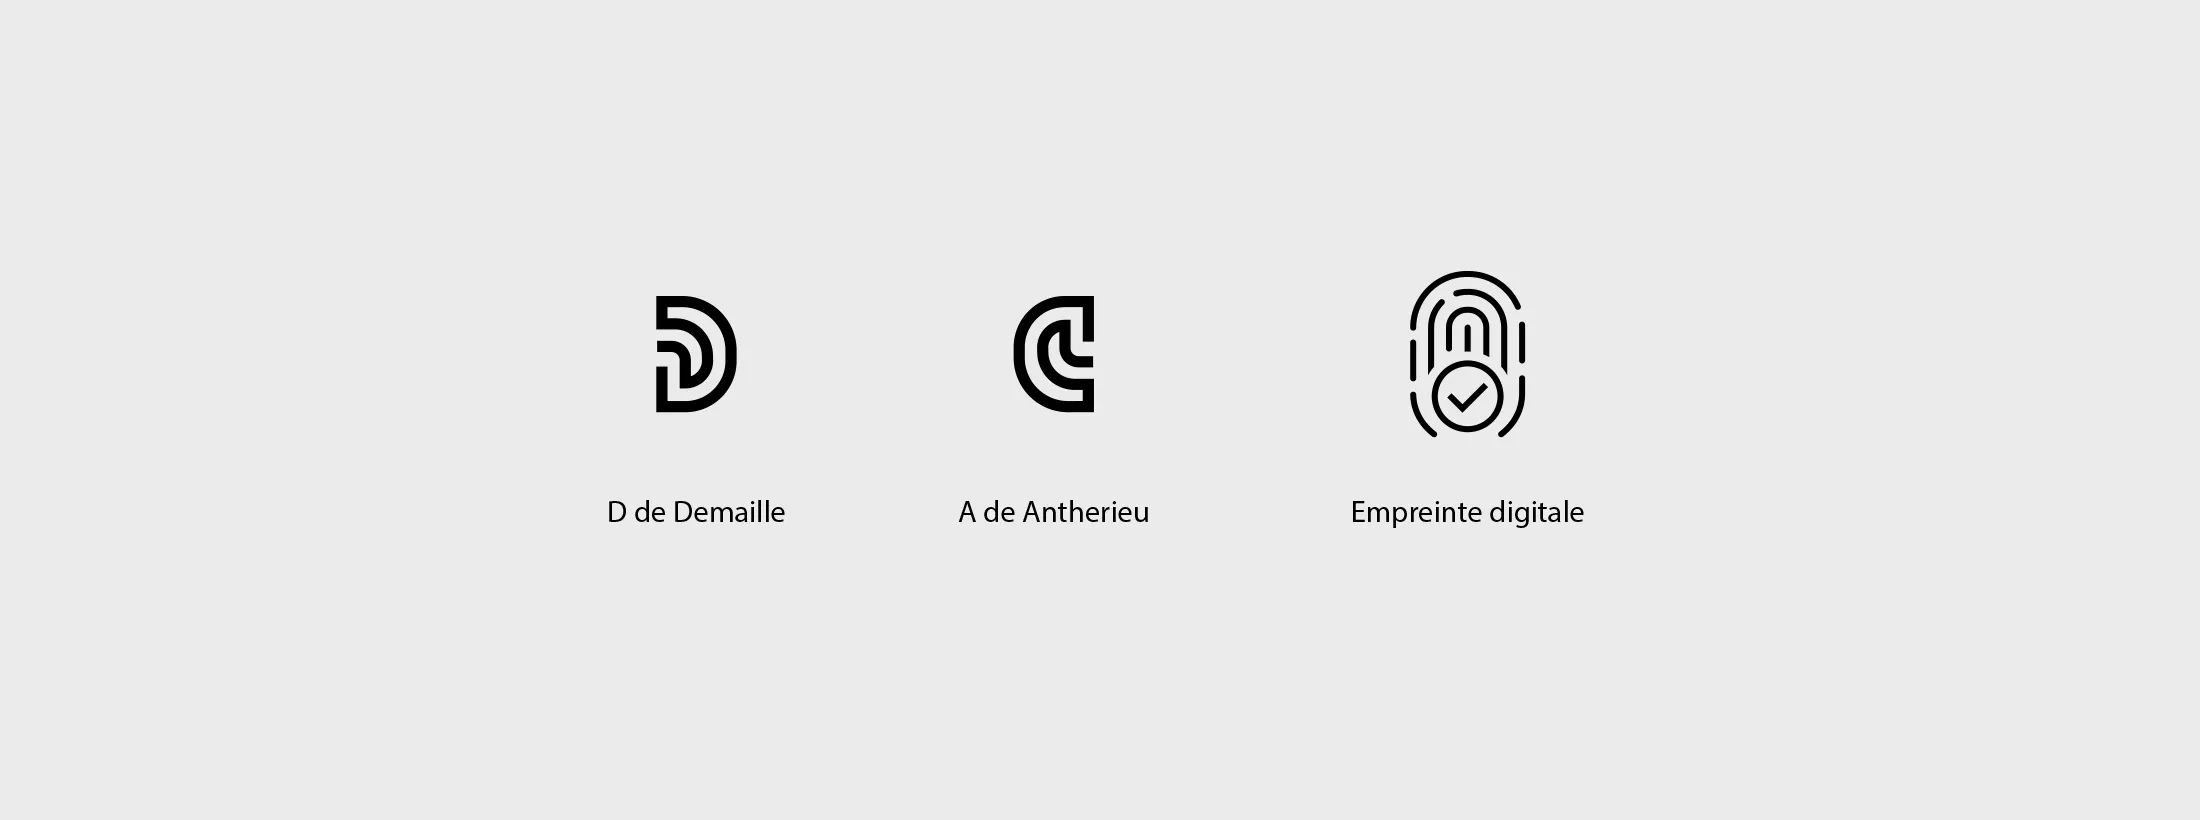 logo lumia branding brain phone design identite visuelle osb communication